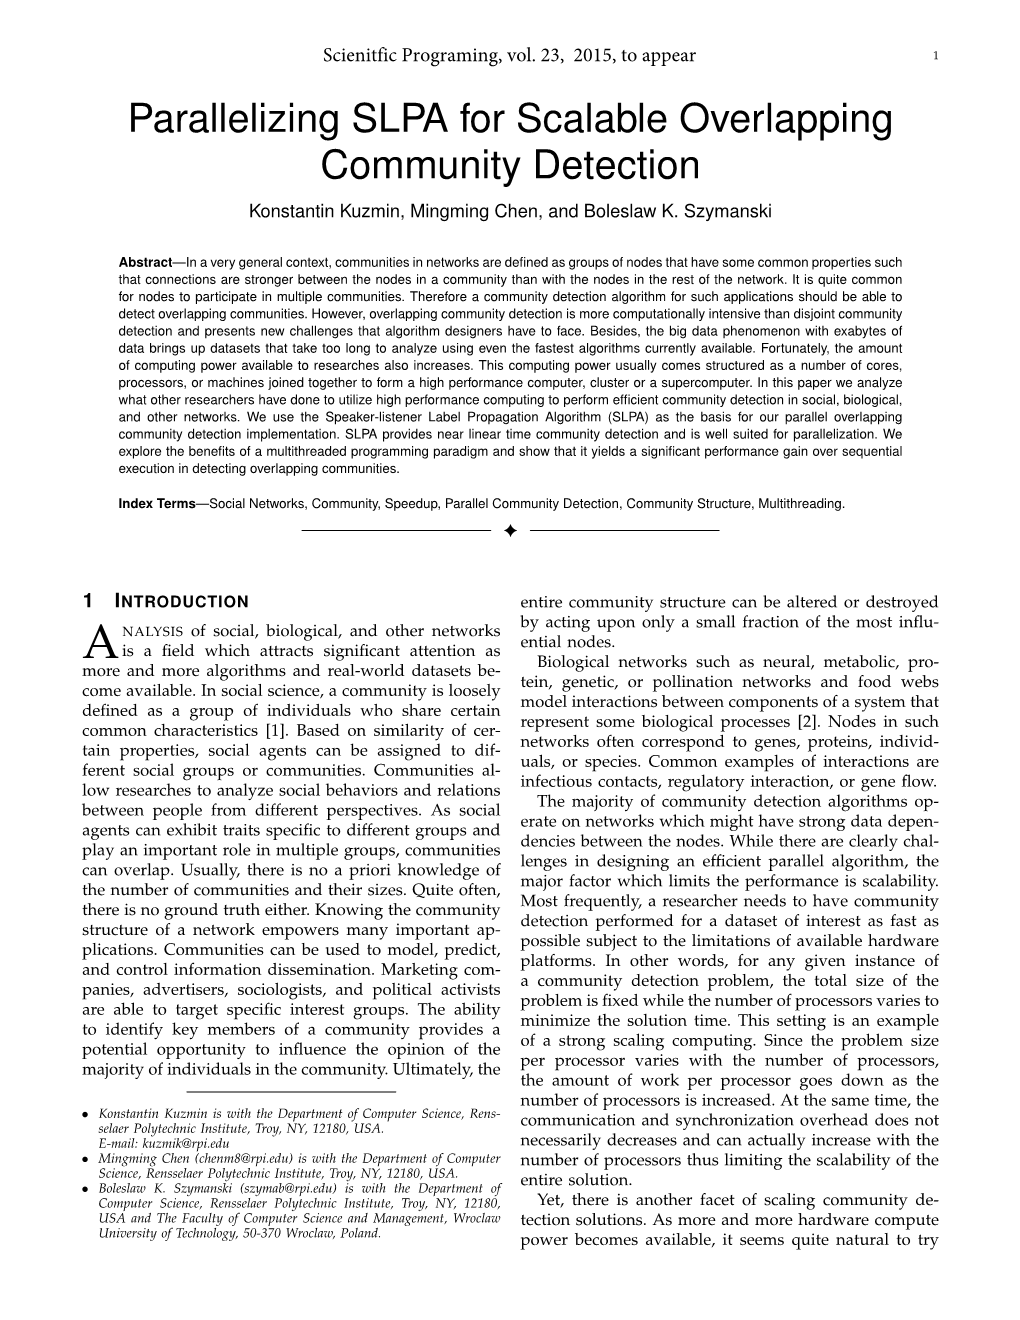 Parallelizing SLPA for Scalable Overlapping Community Detection Konstantin Kuzmin, Mingming Chen, and Boleslaw K